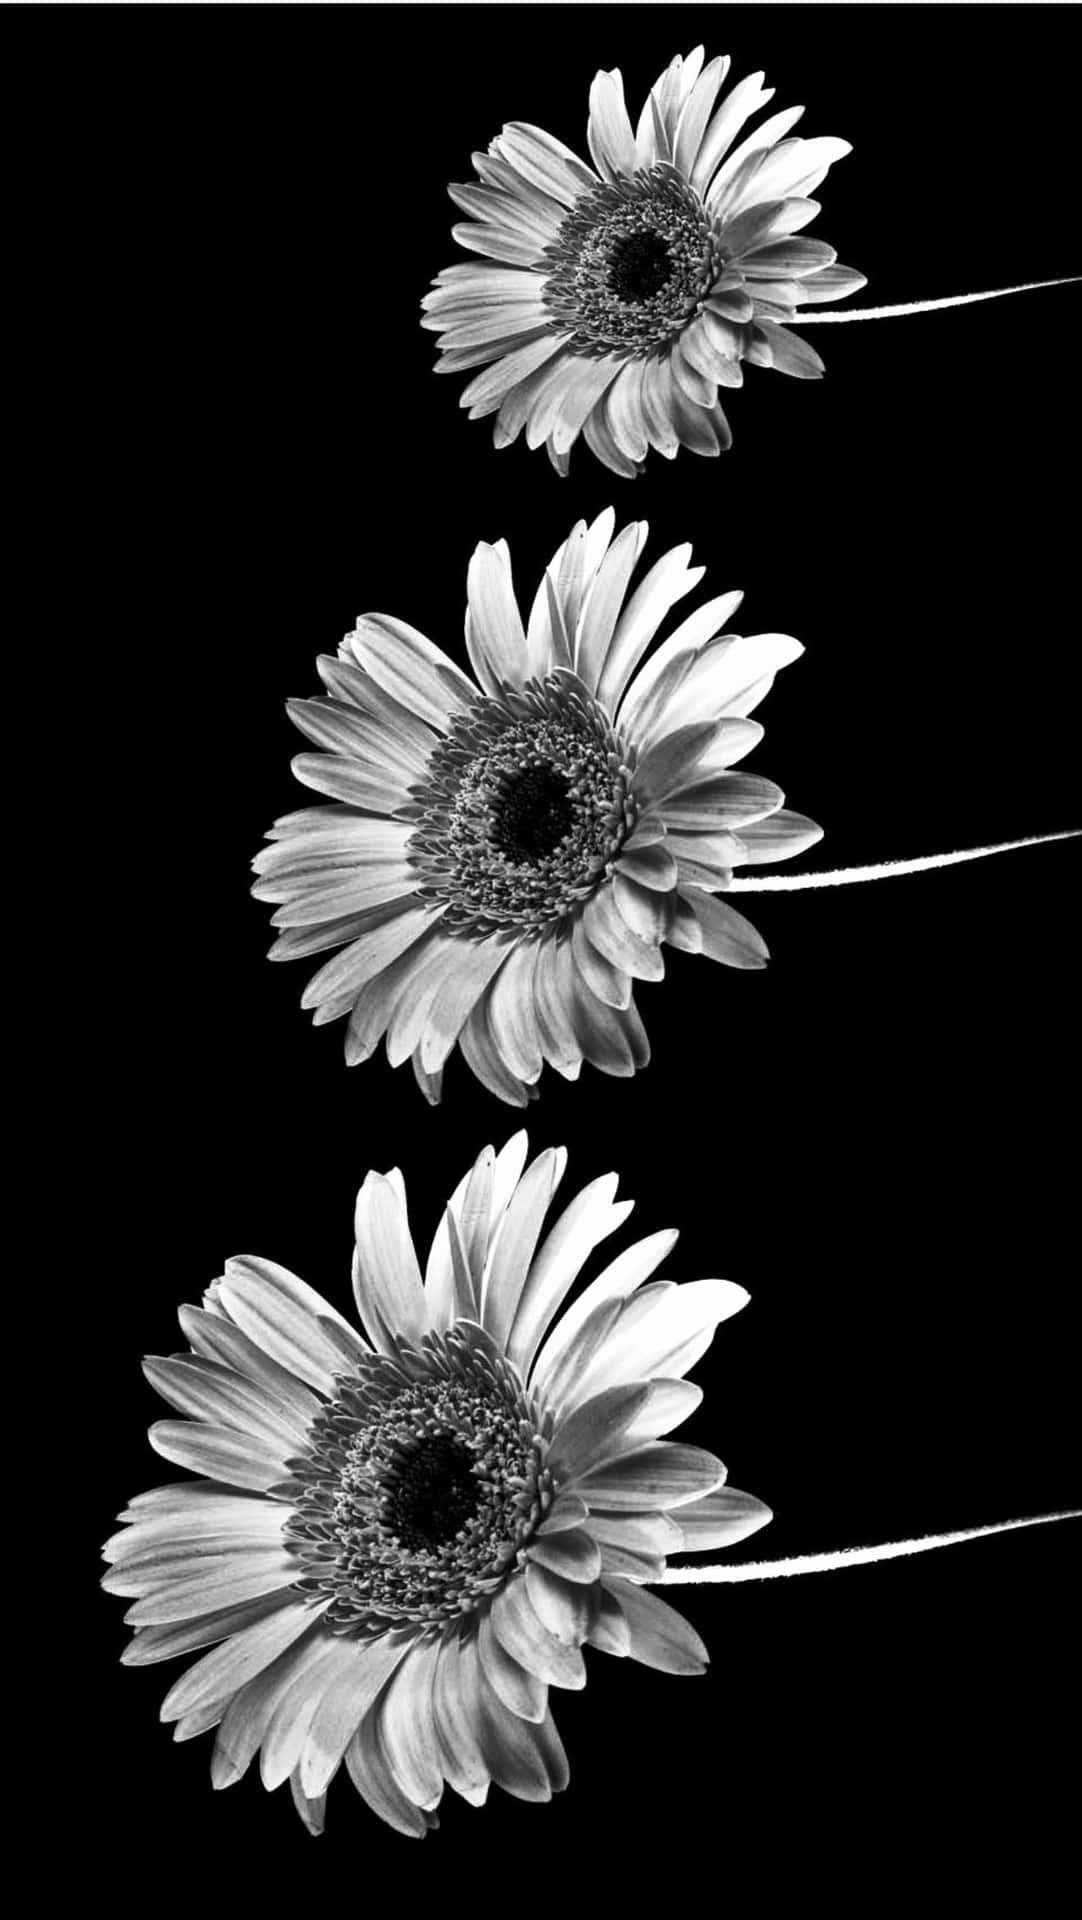 Three Sunflowers Black And White Aesthetic Phone Background